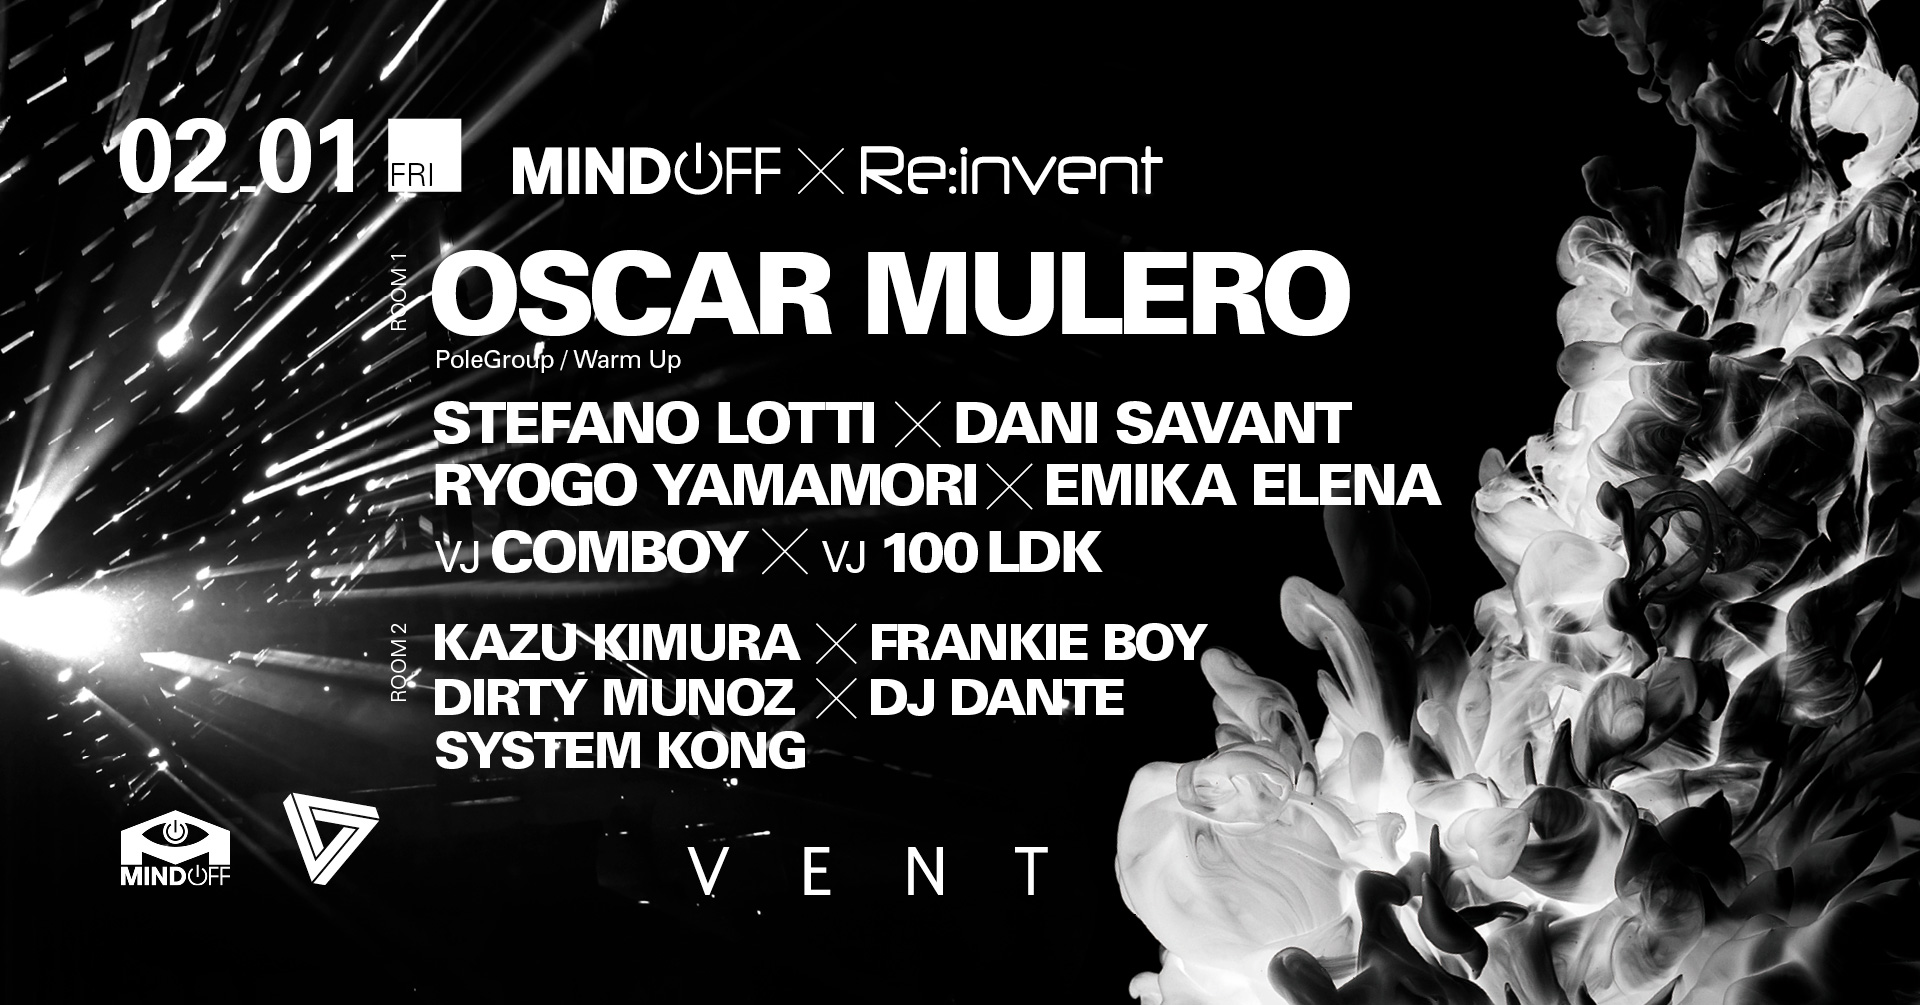 Oscar Mulero at Mind Off x Re:invent